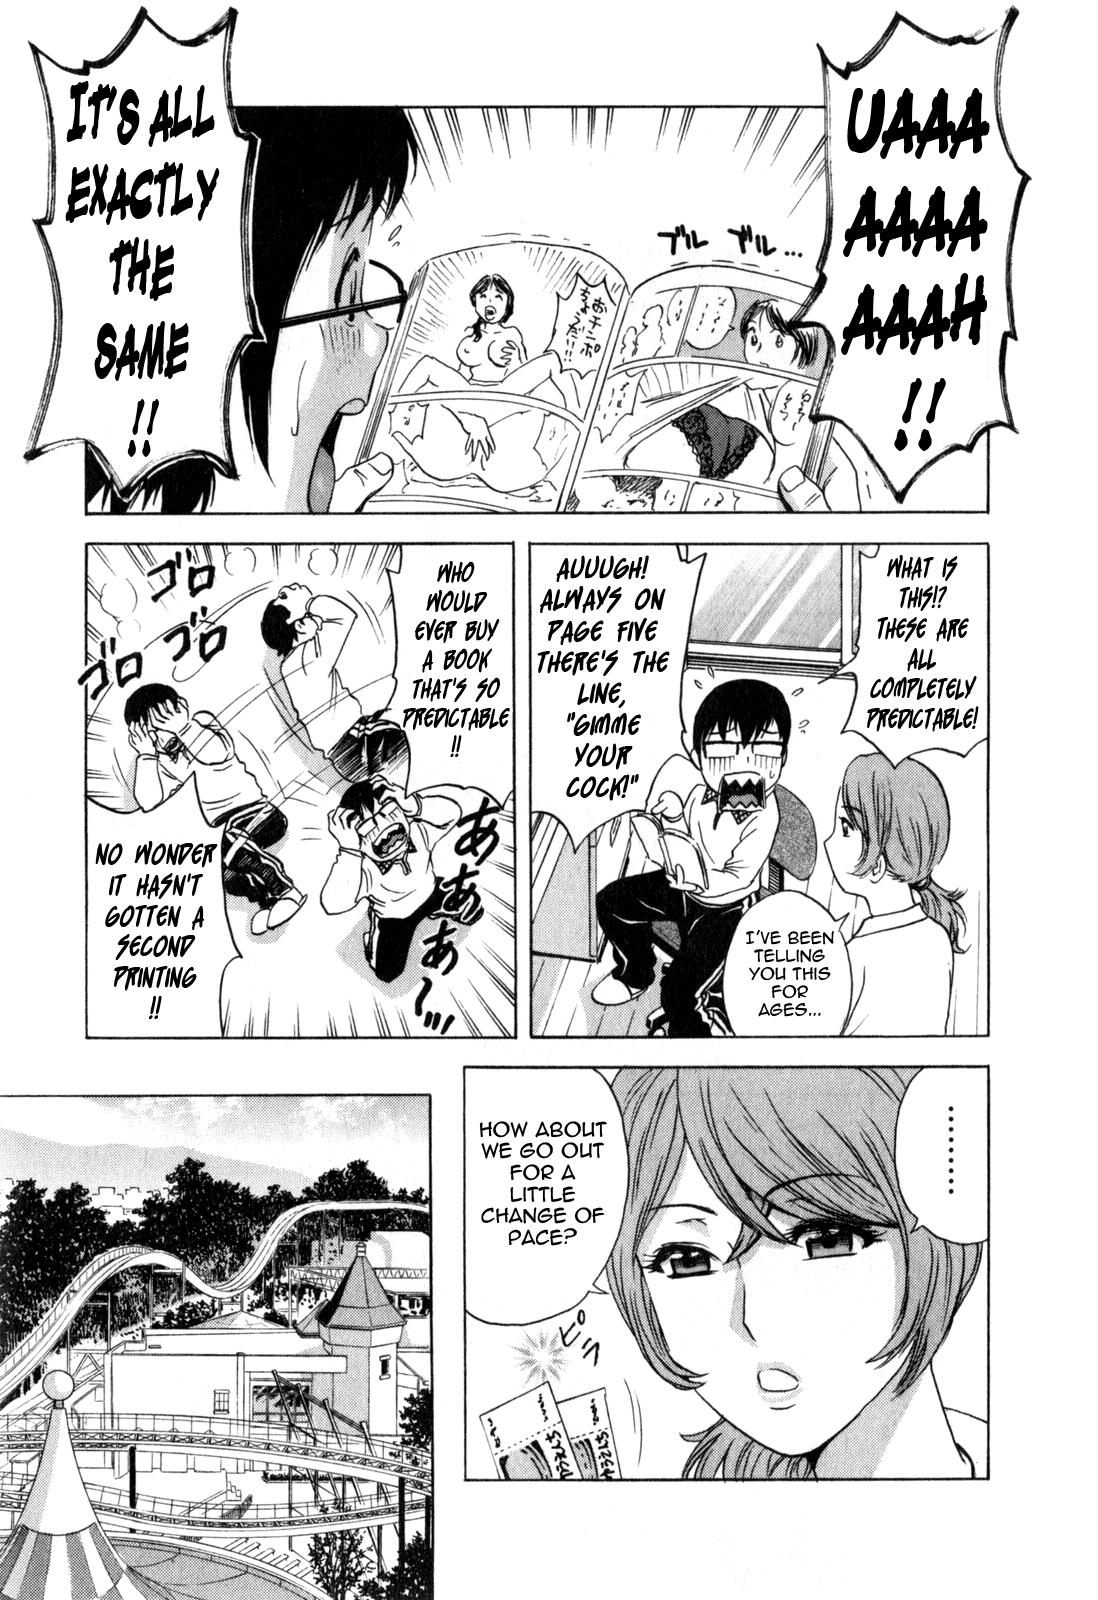 [Hidemaru] Life with Married Women Just Like a Manga 3 - Ch. 1-8 [English] {Tadanohito} 30